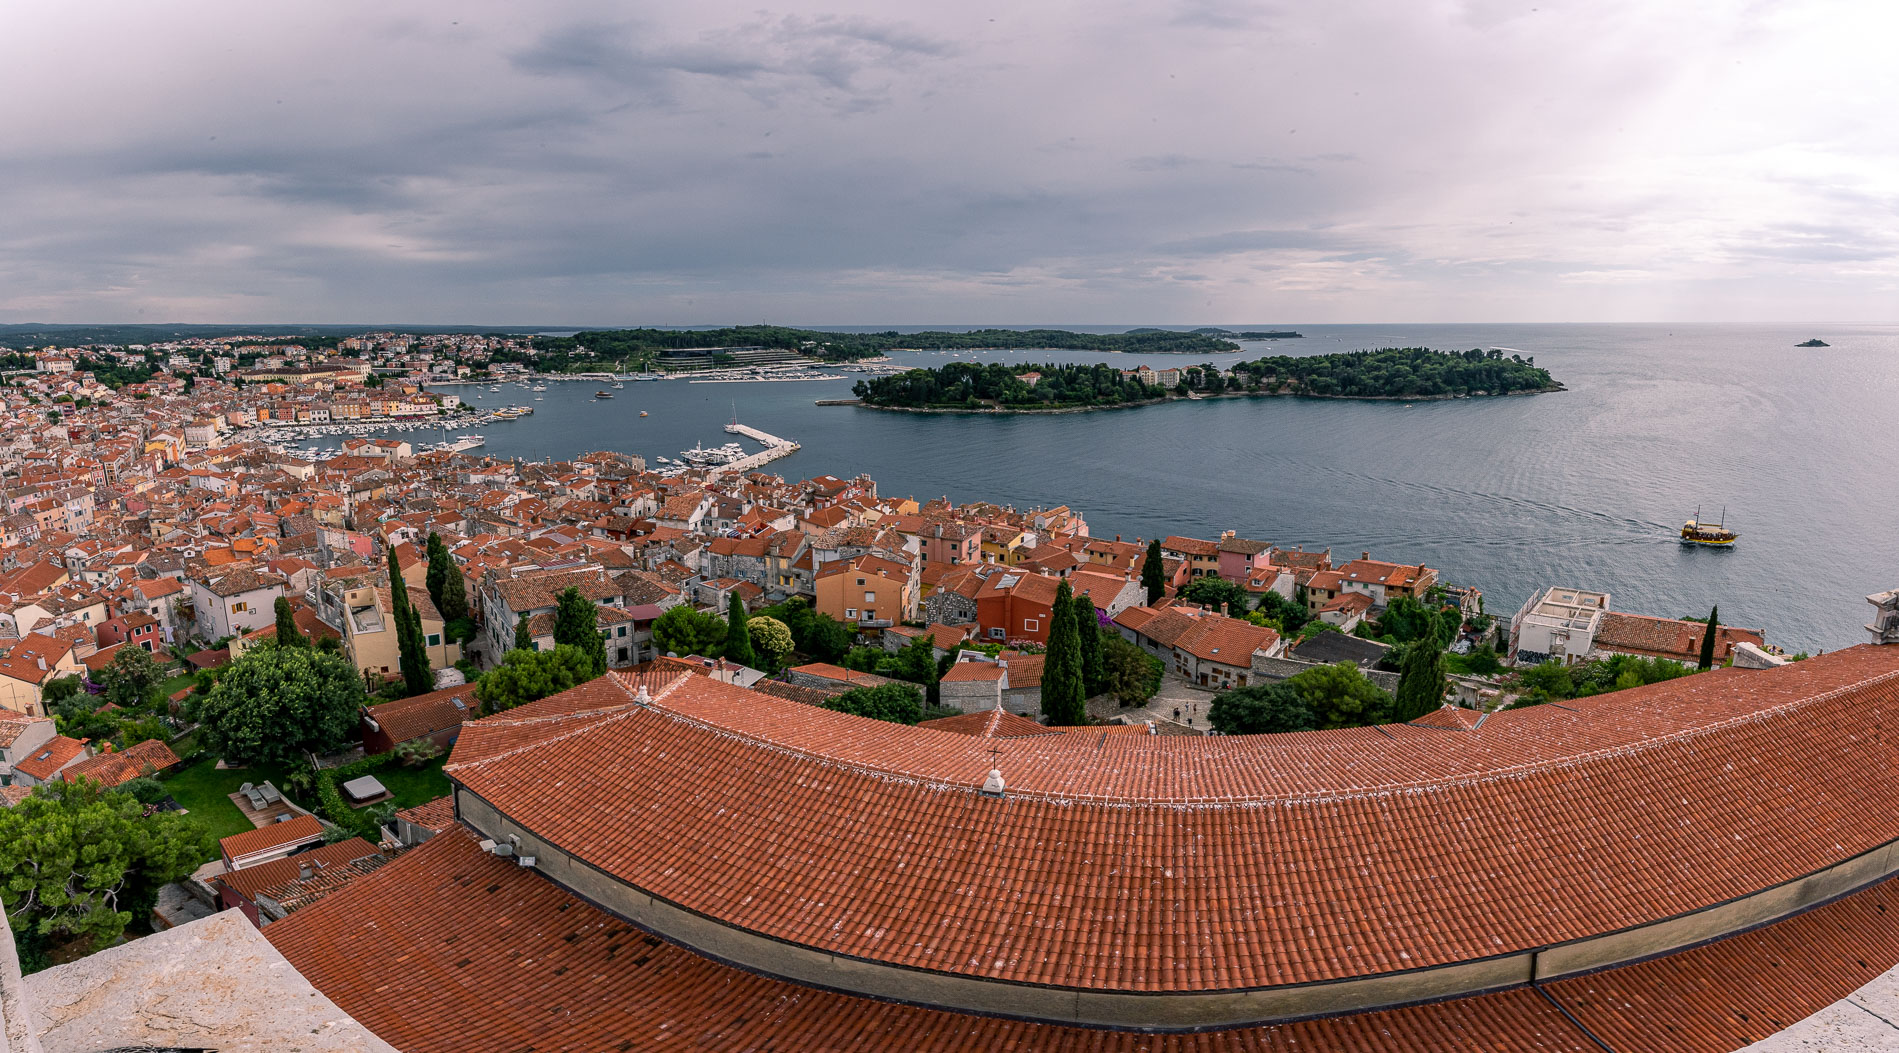 Roof of Rovinj! Croatia 2021